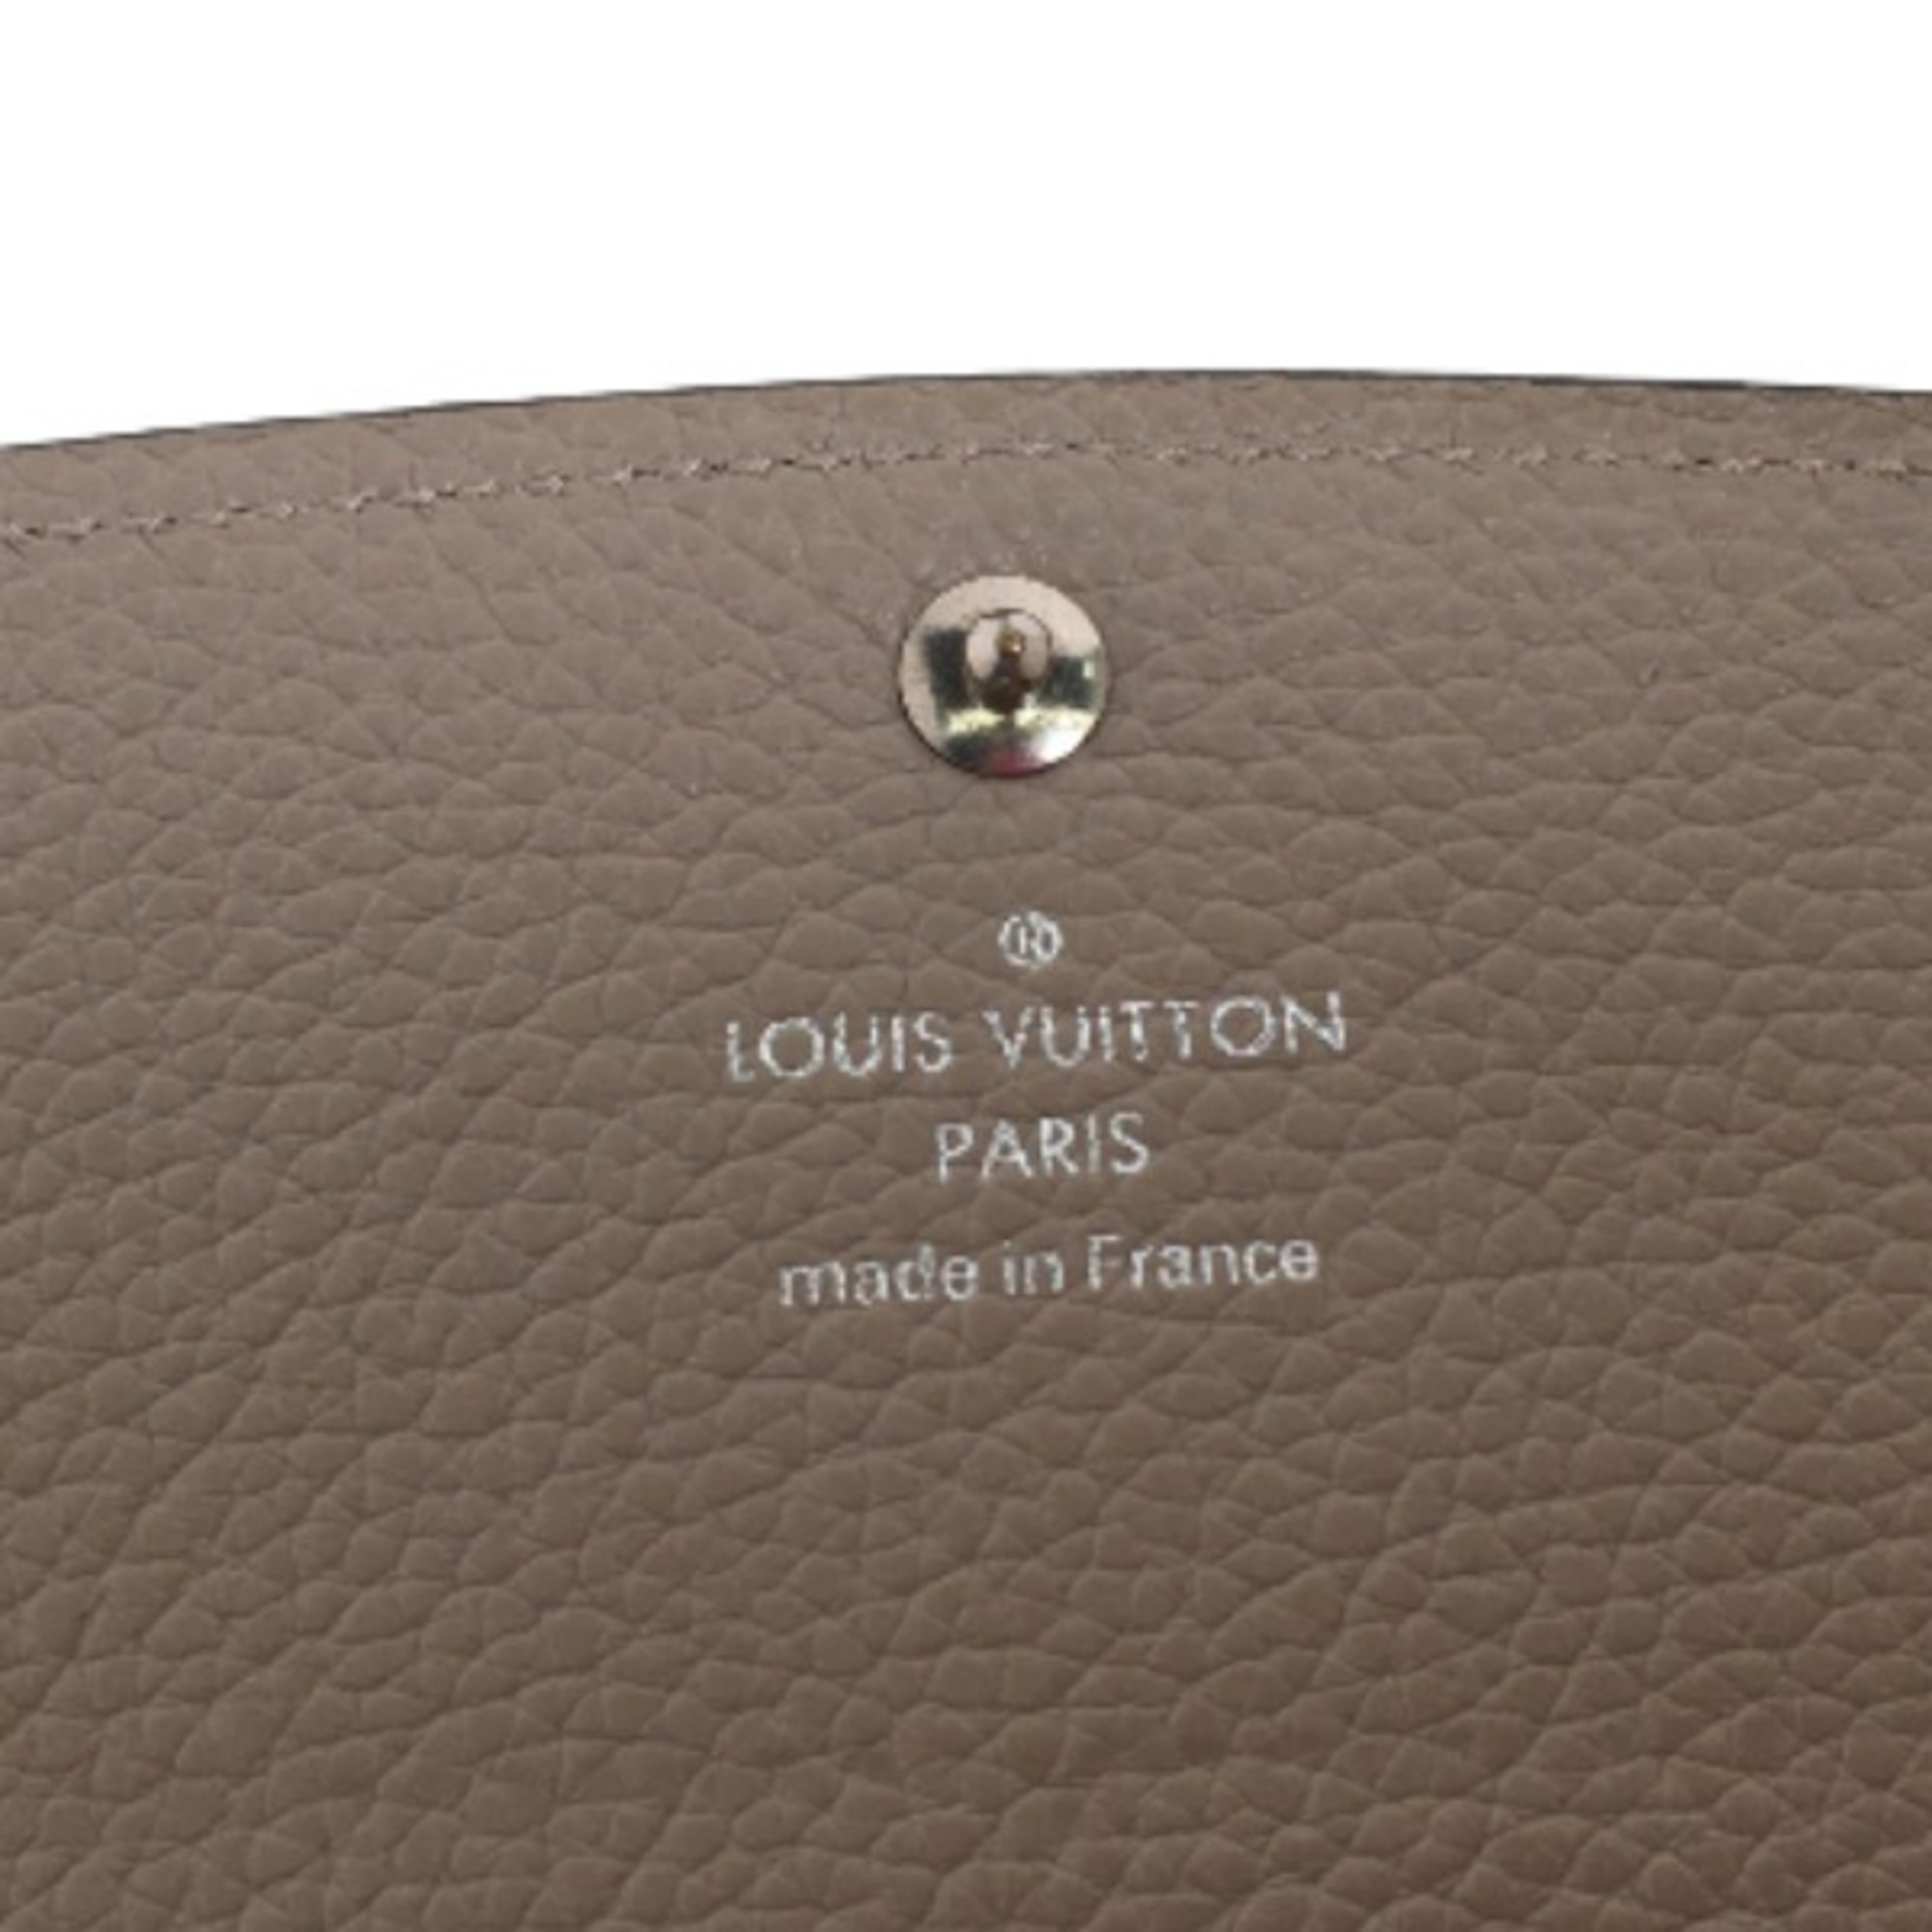 LOUIS VUITTON Long Wallet Monogram Portefeuille Iris M60144 Louis Vuitton Galle LV